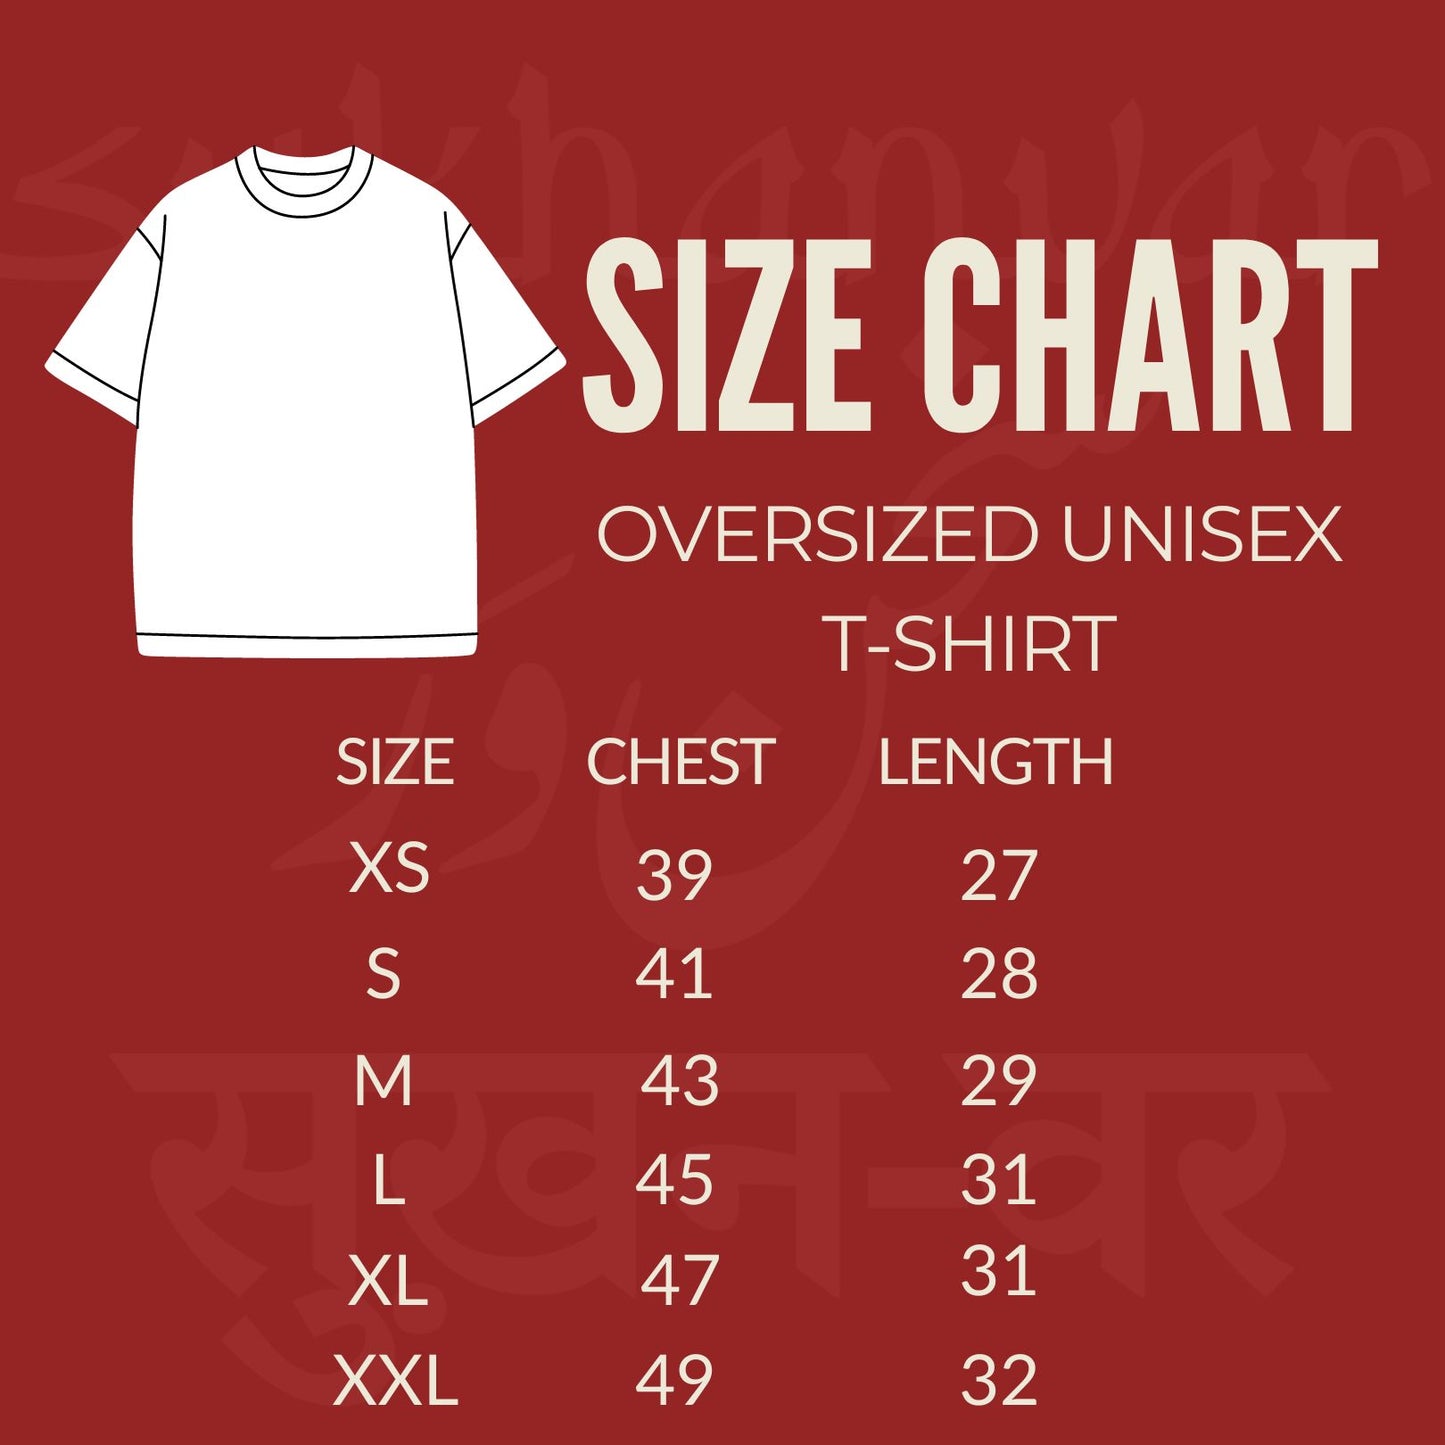 Hosh Walon Ko Khabar Kya - Nida Fazli  Oversized Tshirt (Eng), Oversized Tshirt,  T-shirt available in Maroon, Black & White.  Urdu Tshirt, Poetry Tshirt, Shayari Tshirt, Rekhta Tshirt, Rekhta Store Merchandise. Drop Shoulder Fit